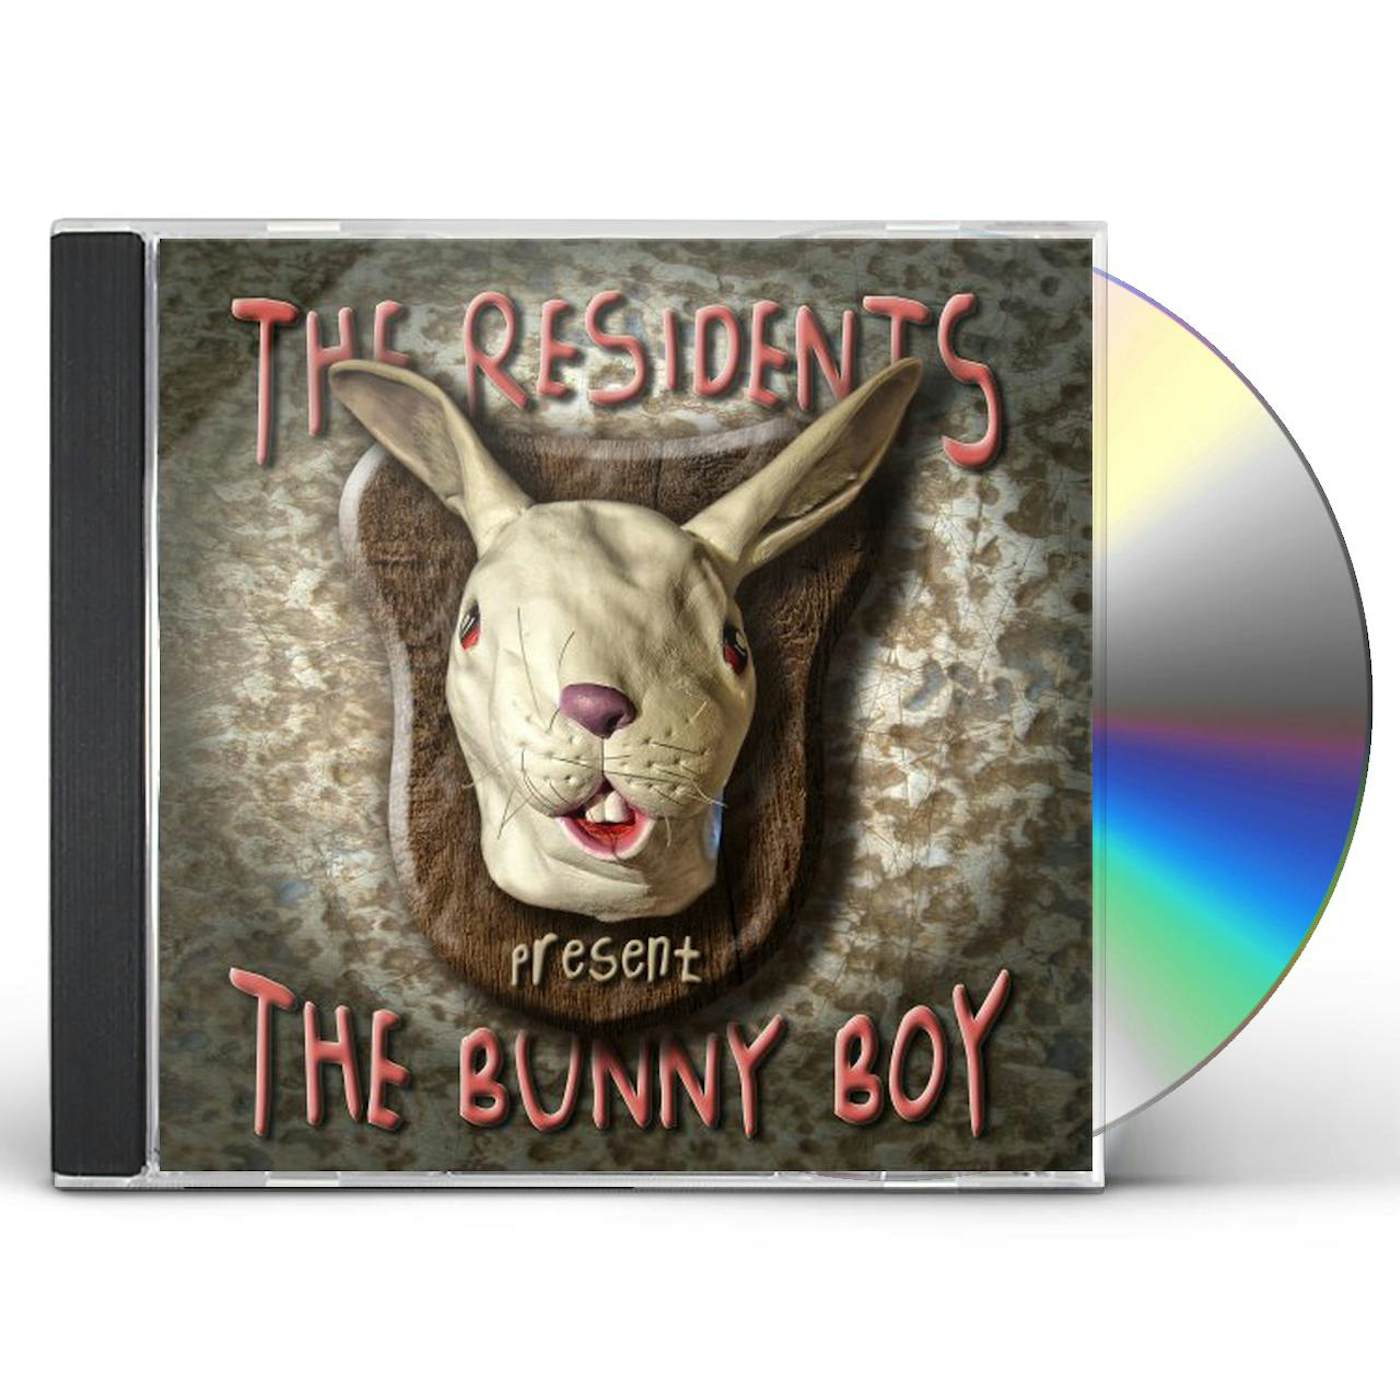 The Residents BUNNY BOY CD